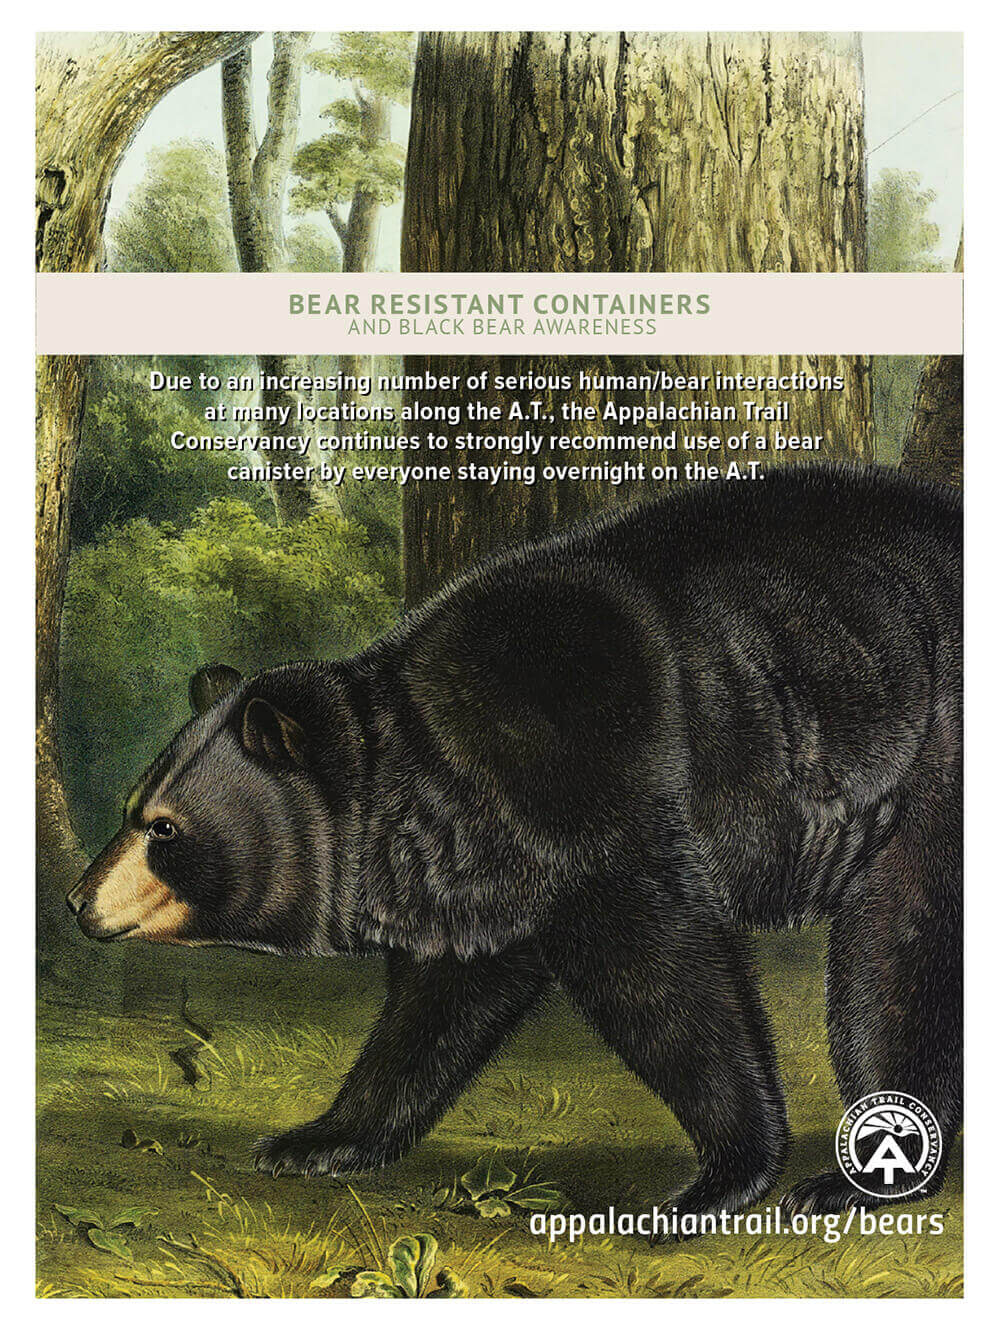 Appalachian Trail Bears Advertisement